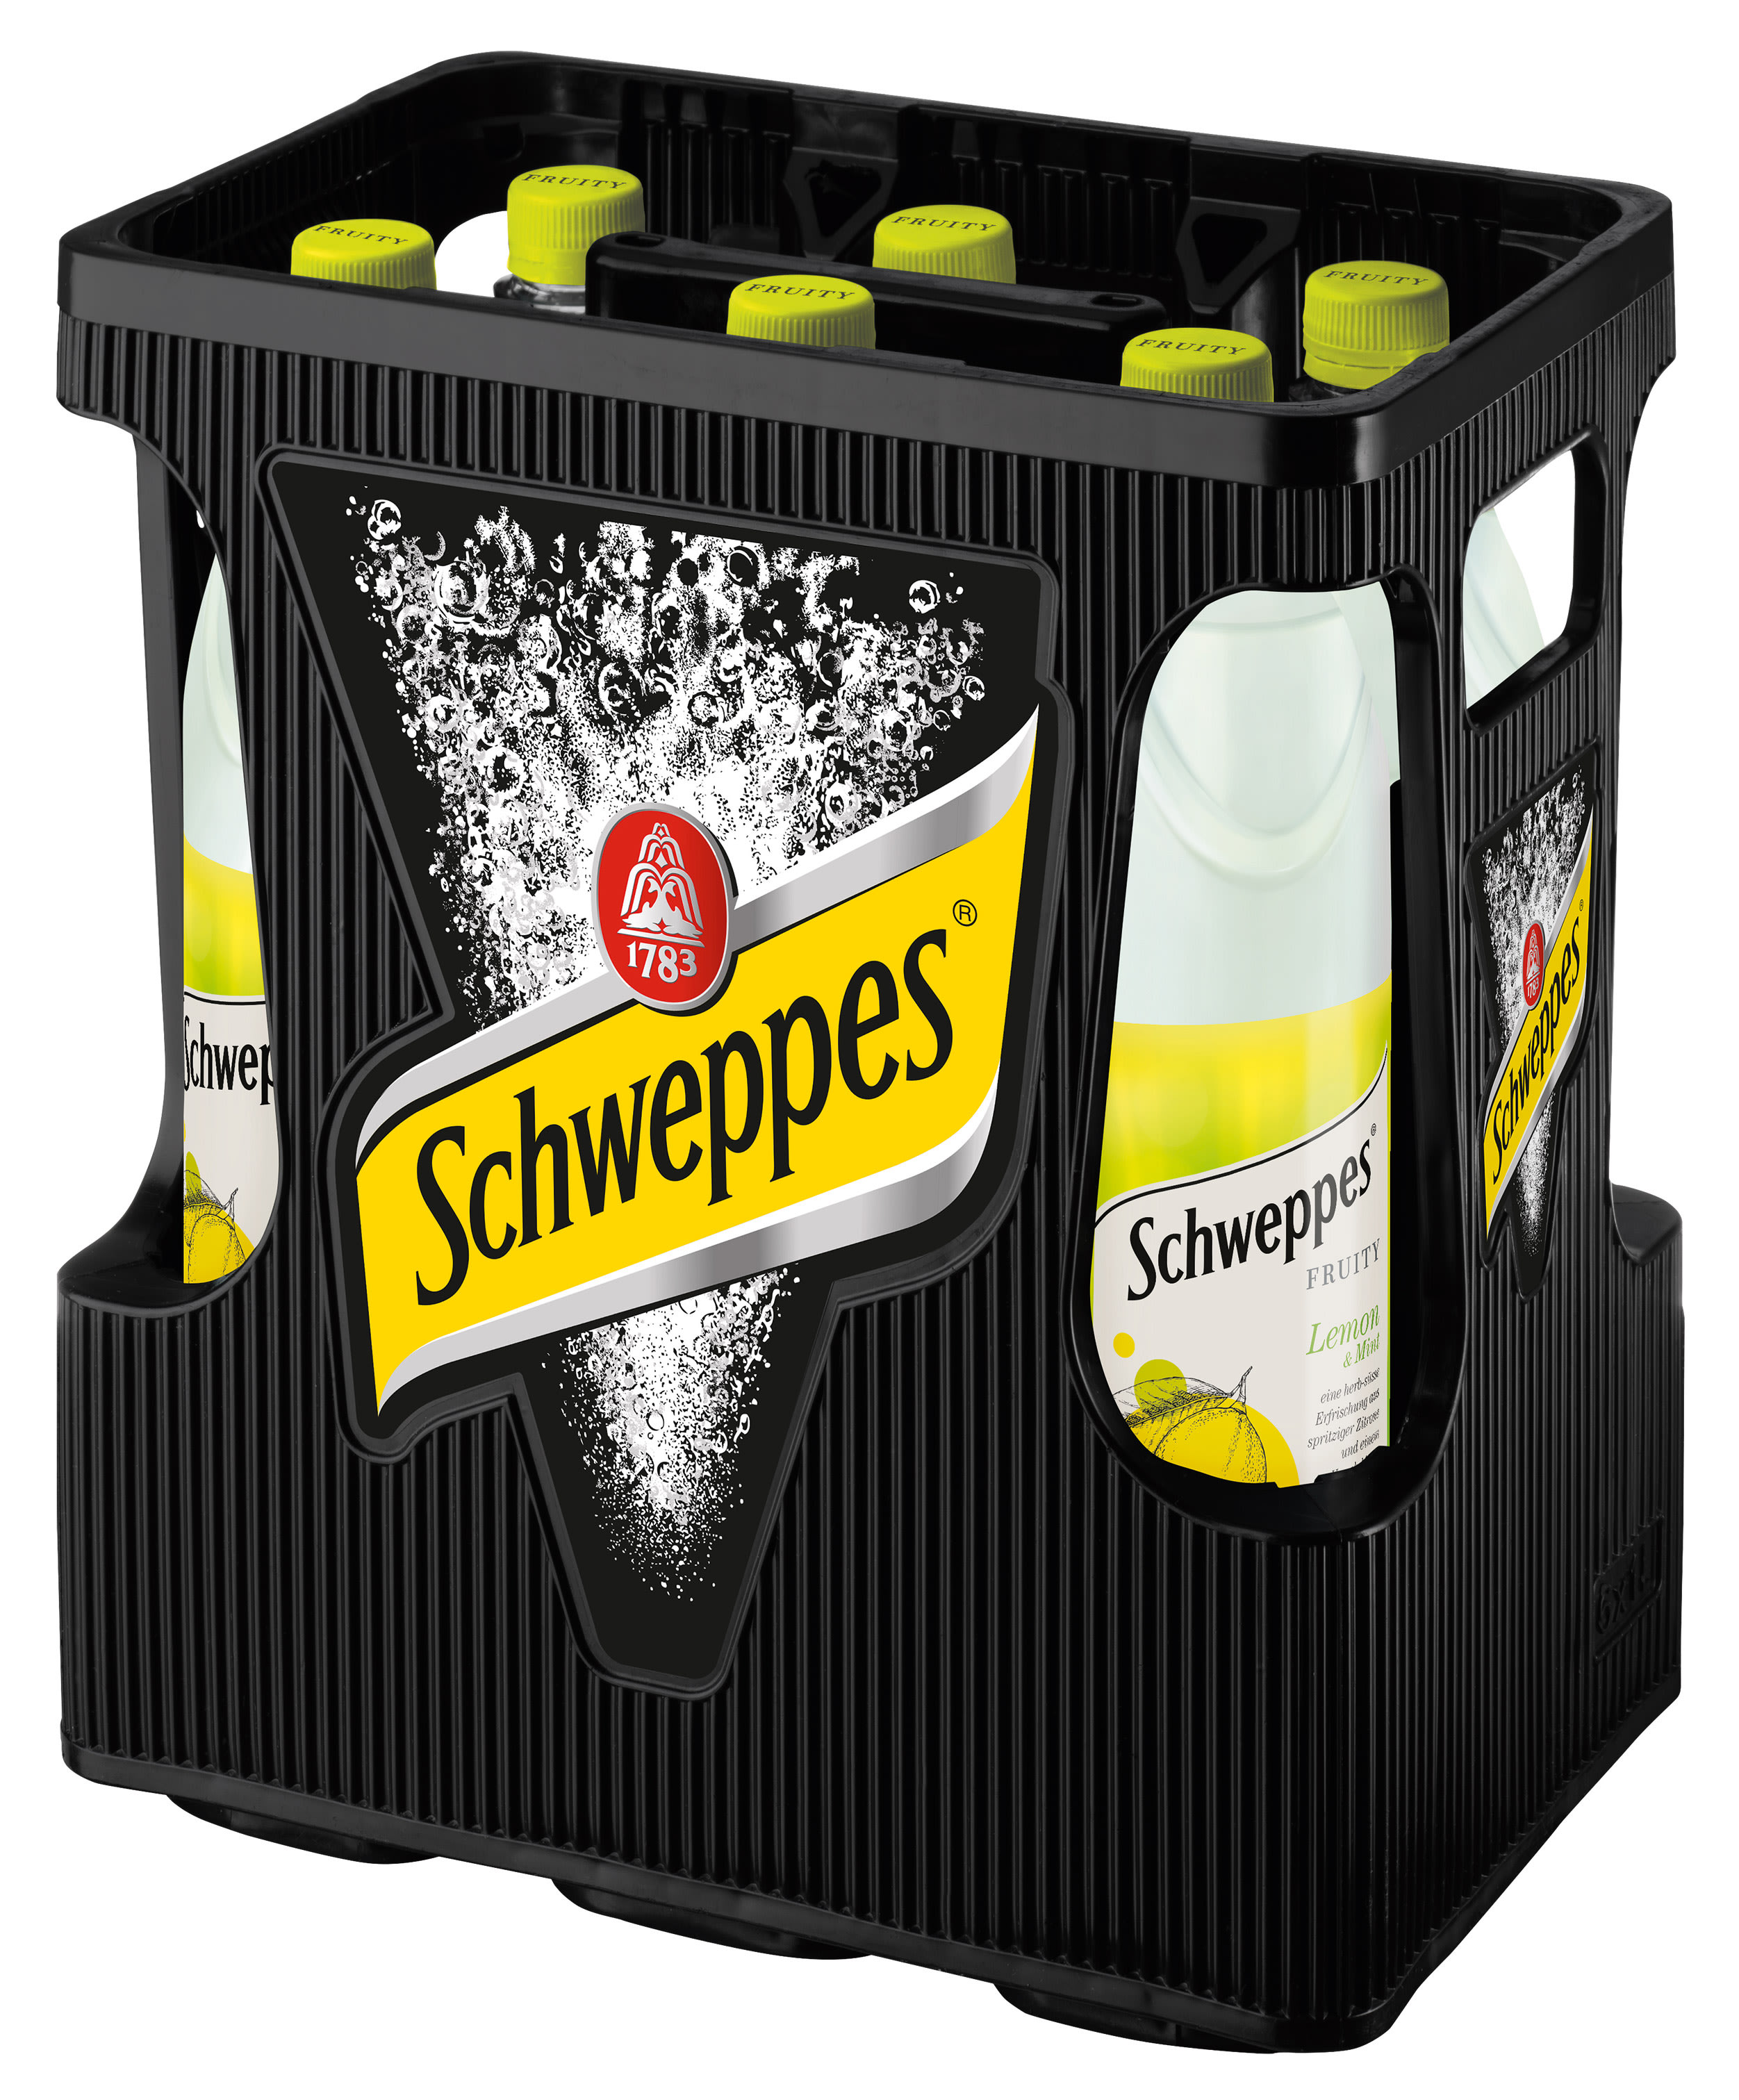 Schweppes Fruity Lemon & Mint Kasten 6 x 1 l PET Mehrweg